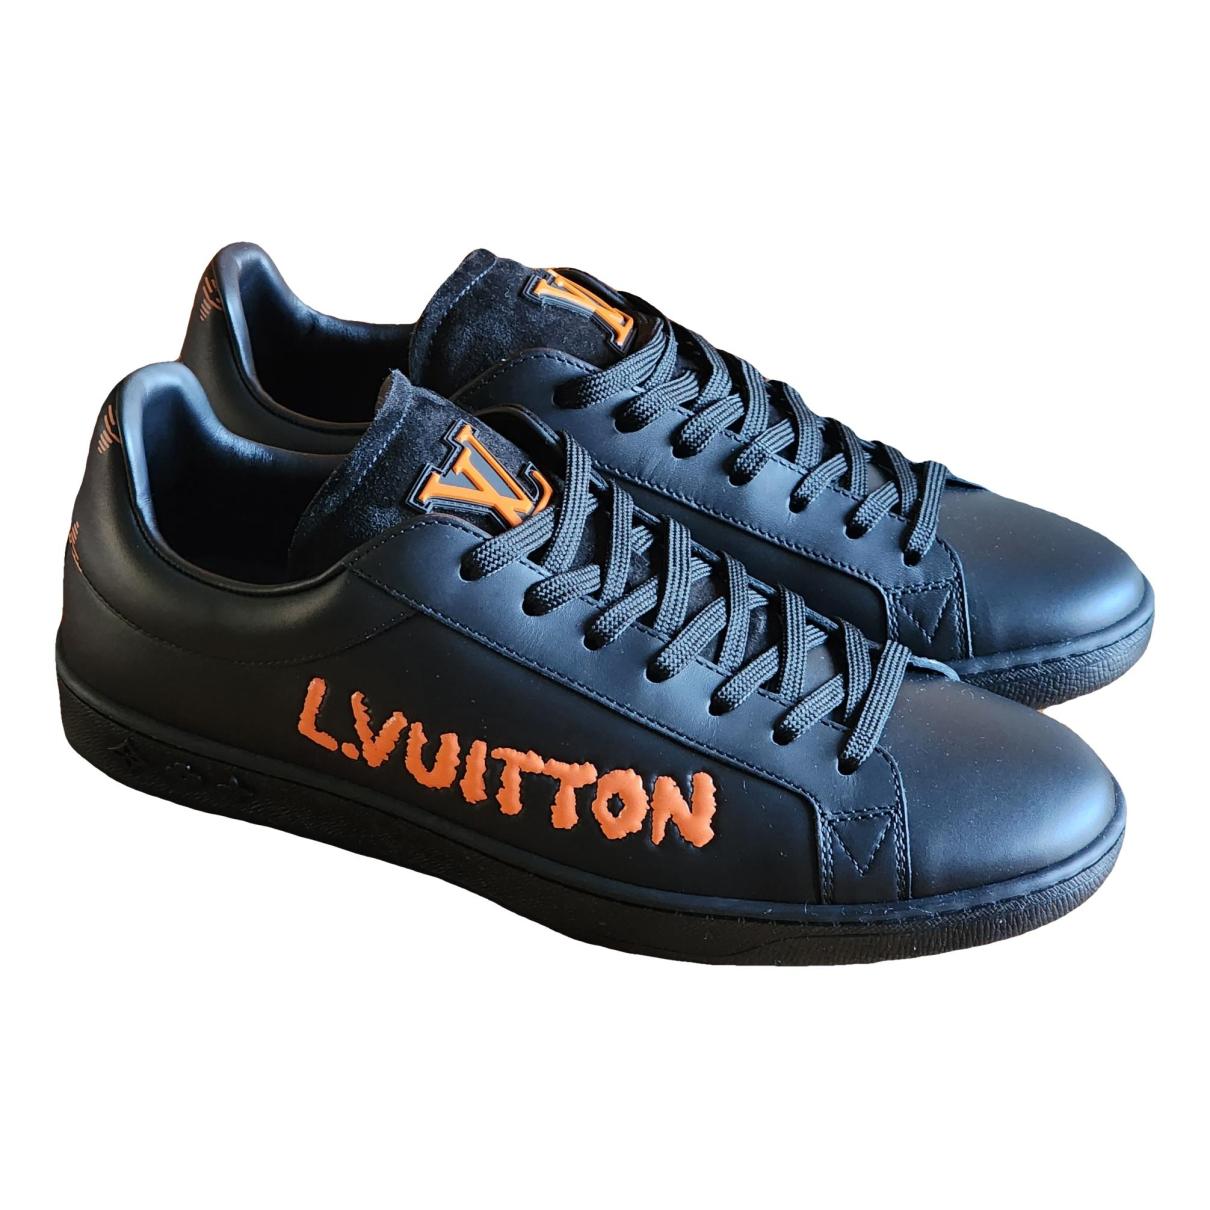 Louis Vuitton Skate Sneaker Red Mens LV Sz 9.5 Exclusive Online 100%  Authentic